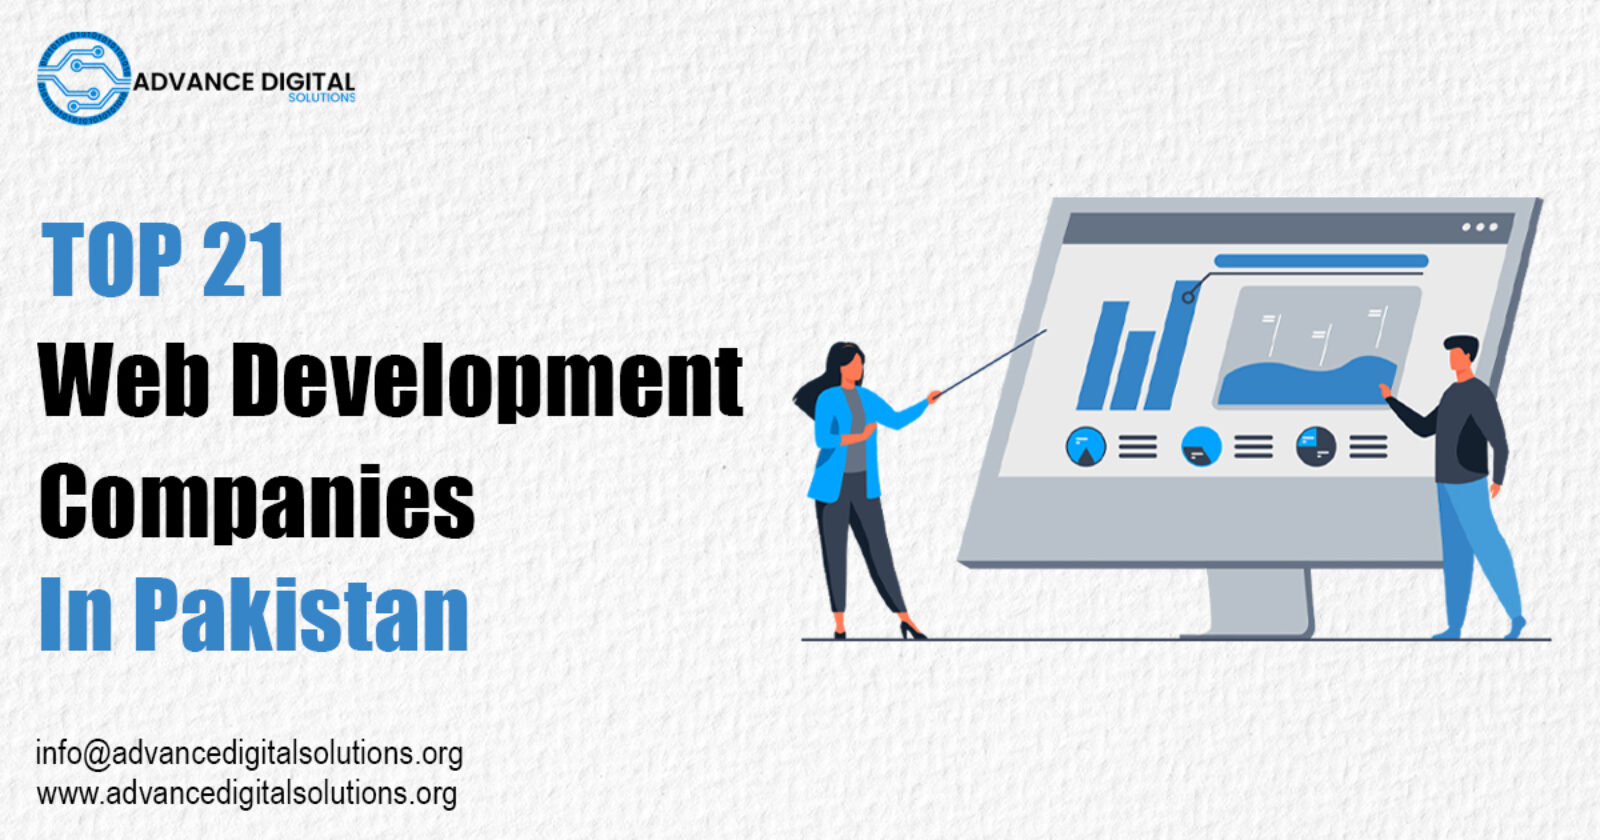 Top 21 web development companies in Pakistan "